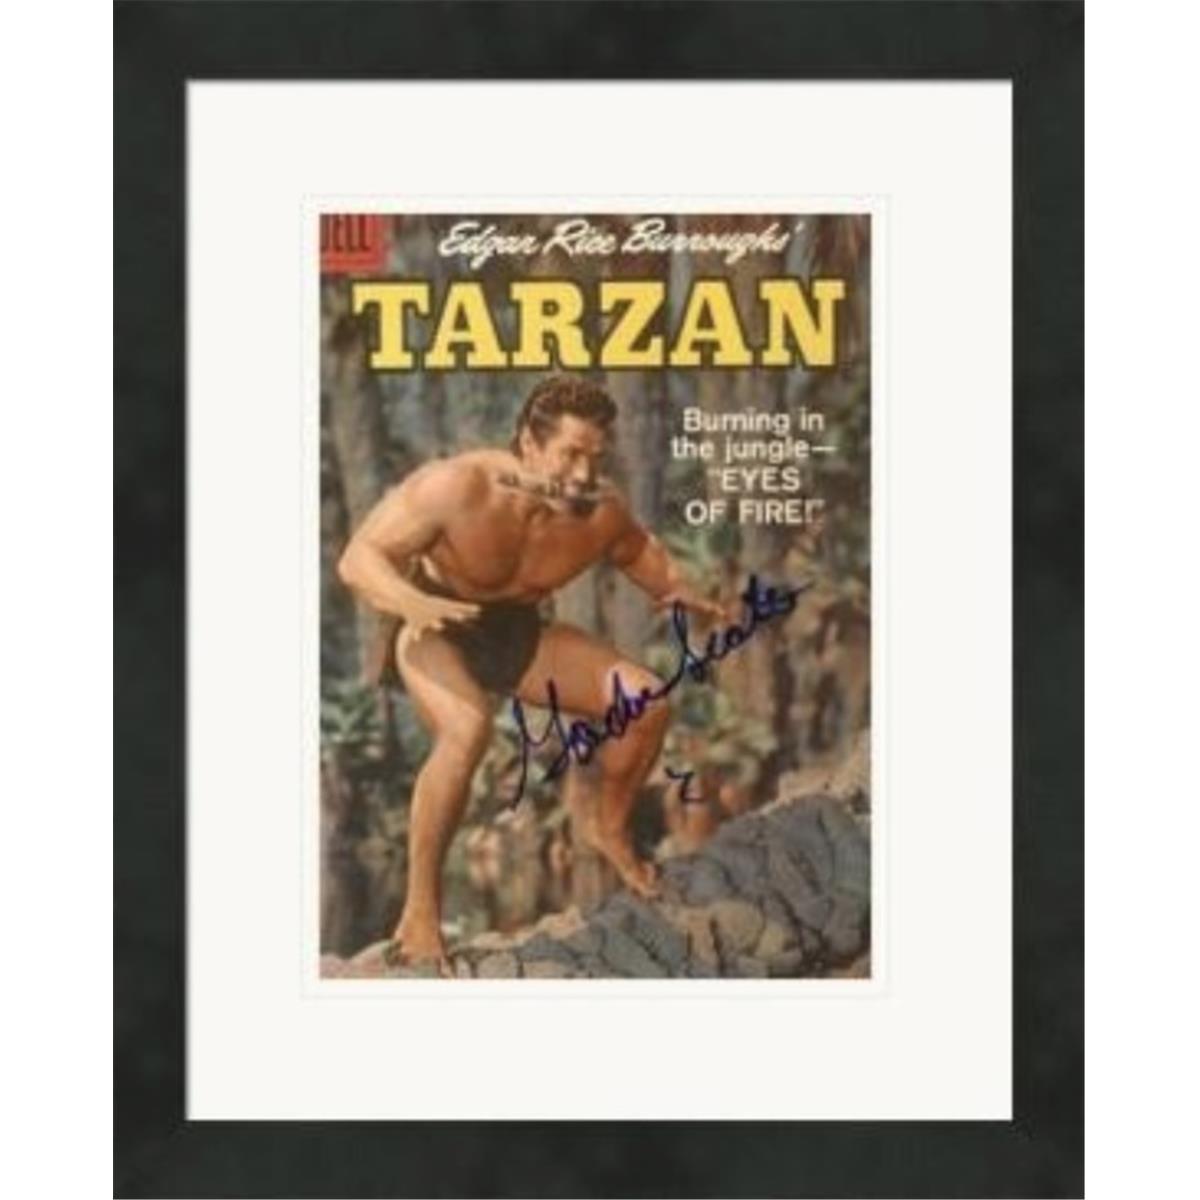 517220 8 x 10 in. Gordon Scott Autographed Matted & Framed Photo - Tarzan No.1 -  Autograph Warehouse